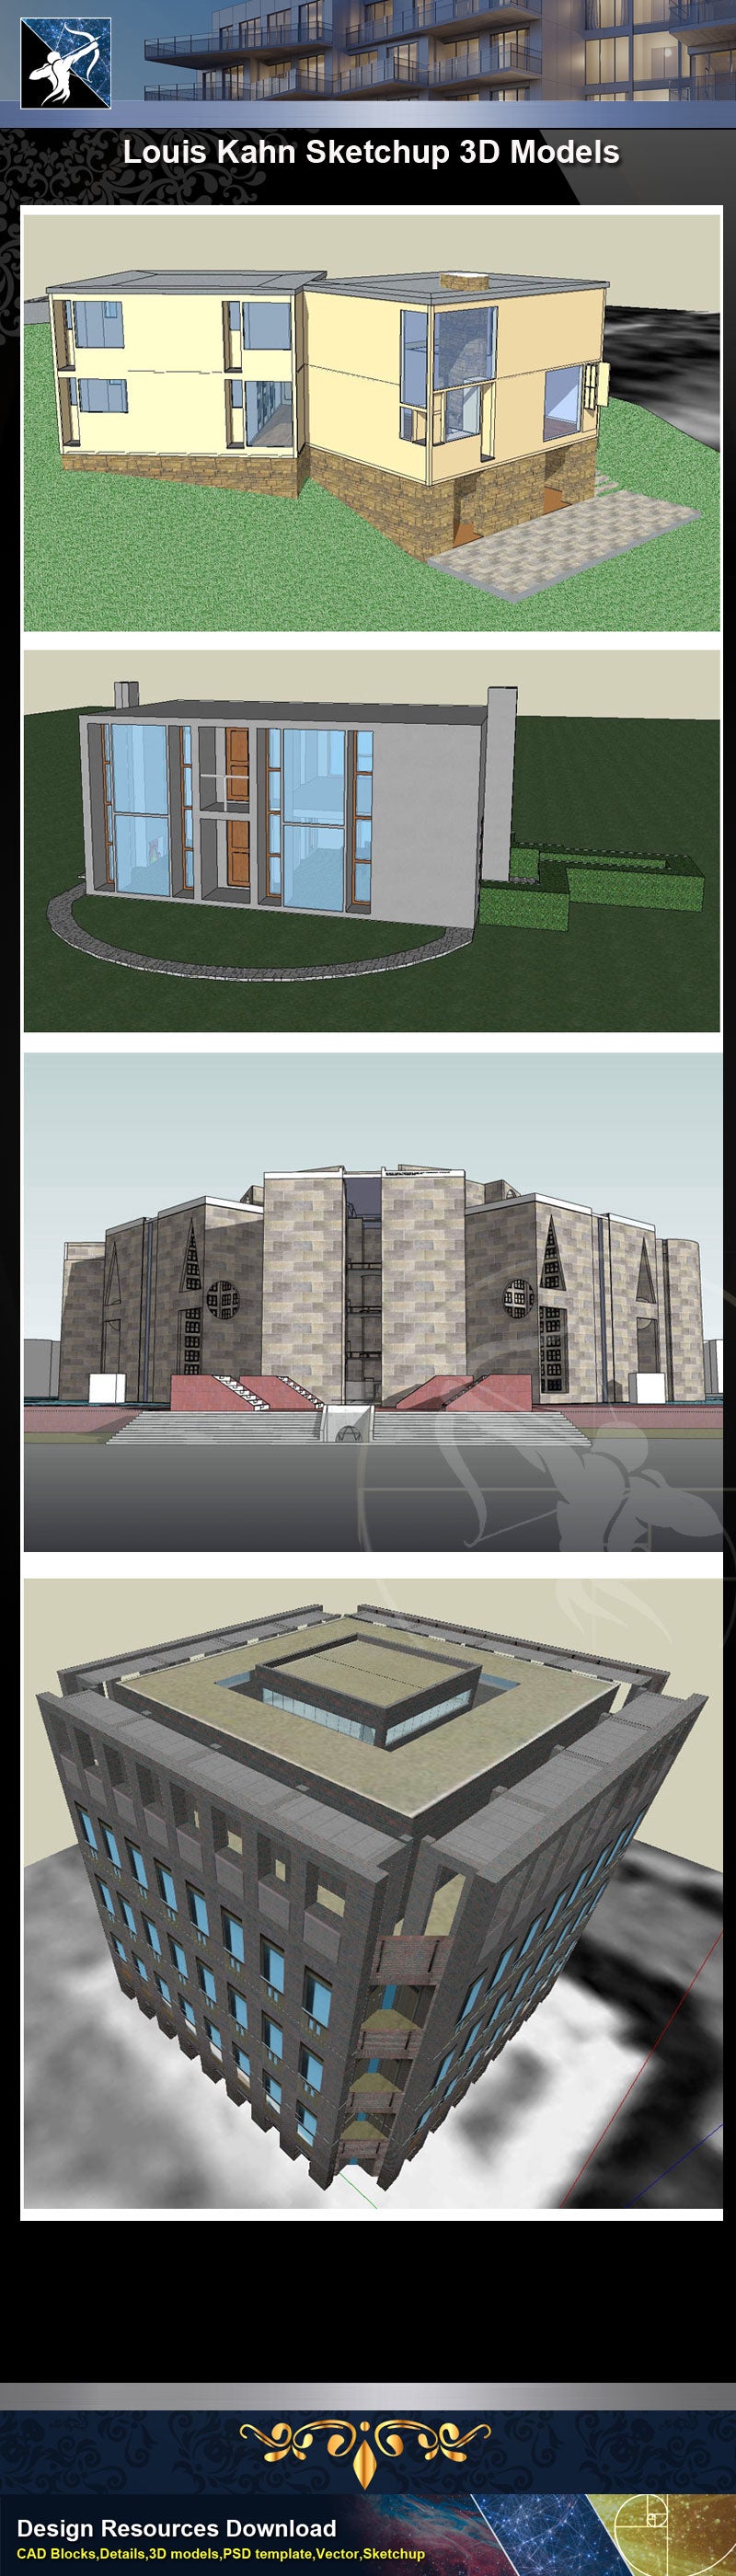 ★Famous Architecture -7 Kinds of Louis Kahn Sketchup 3D Models